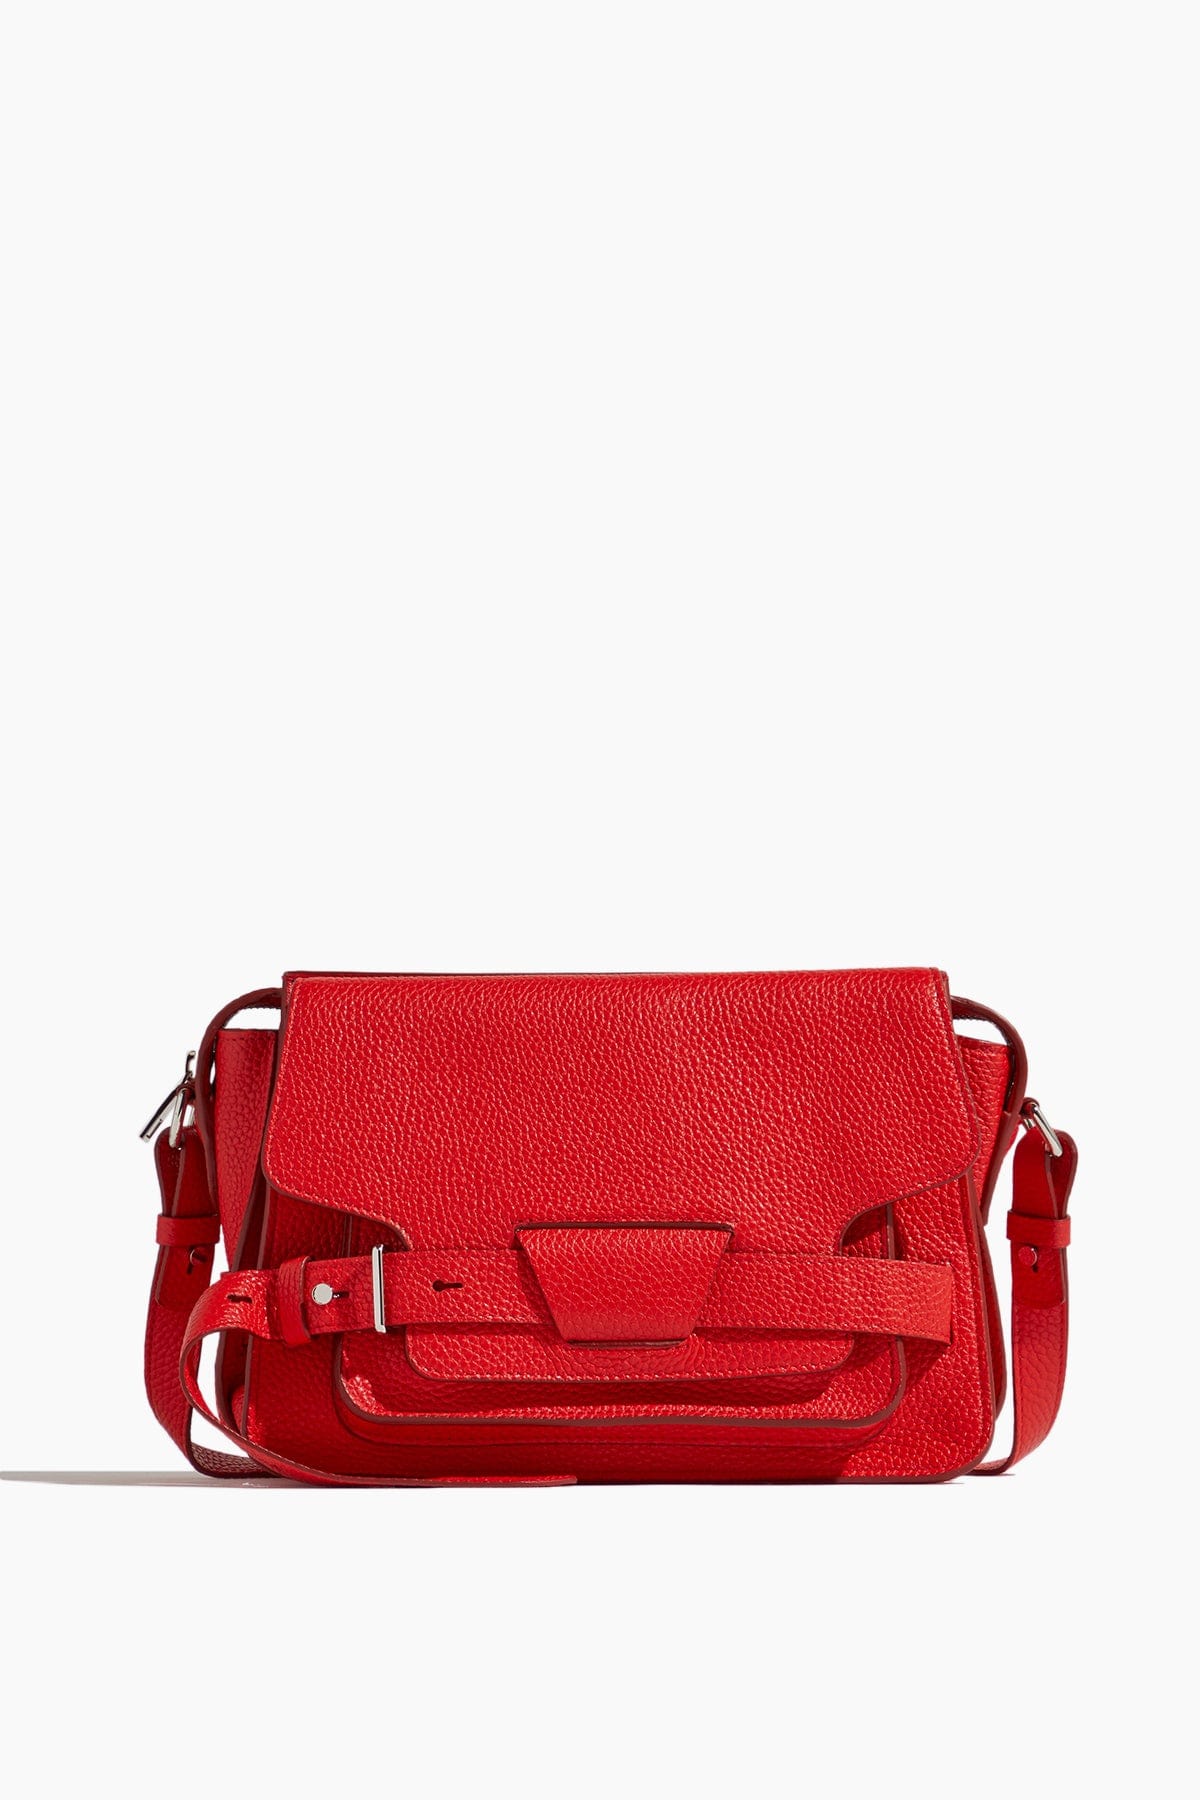 Proenza Schouler Handbags Cross Body Bags Beacon Saddle Bag in Rosso